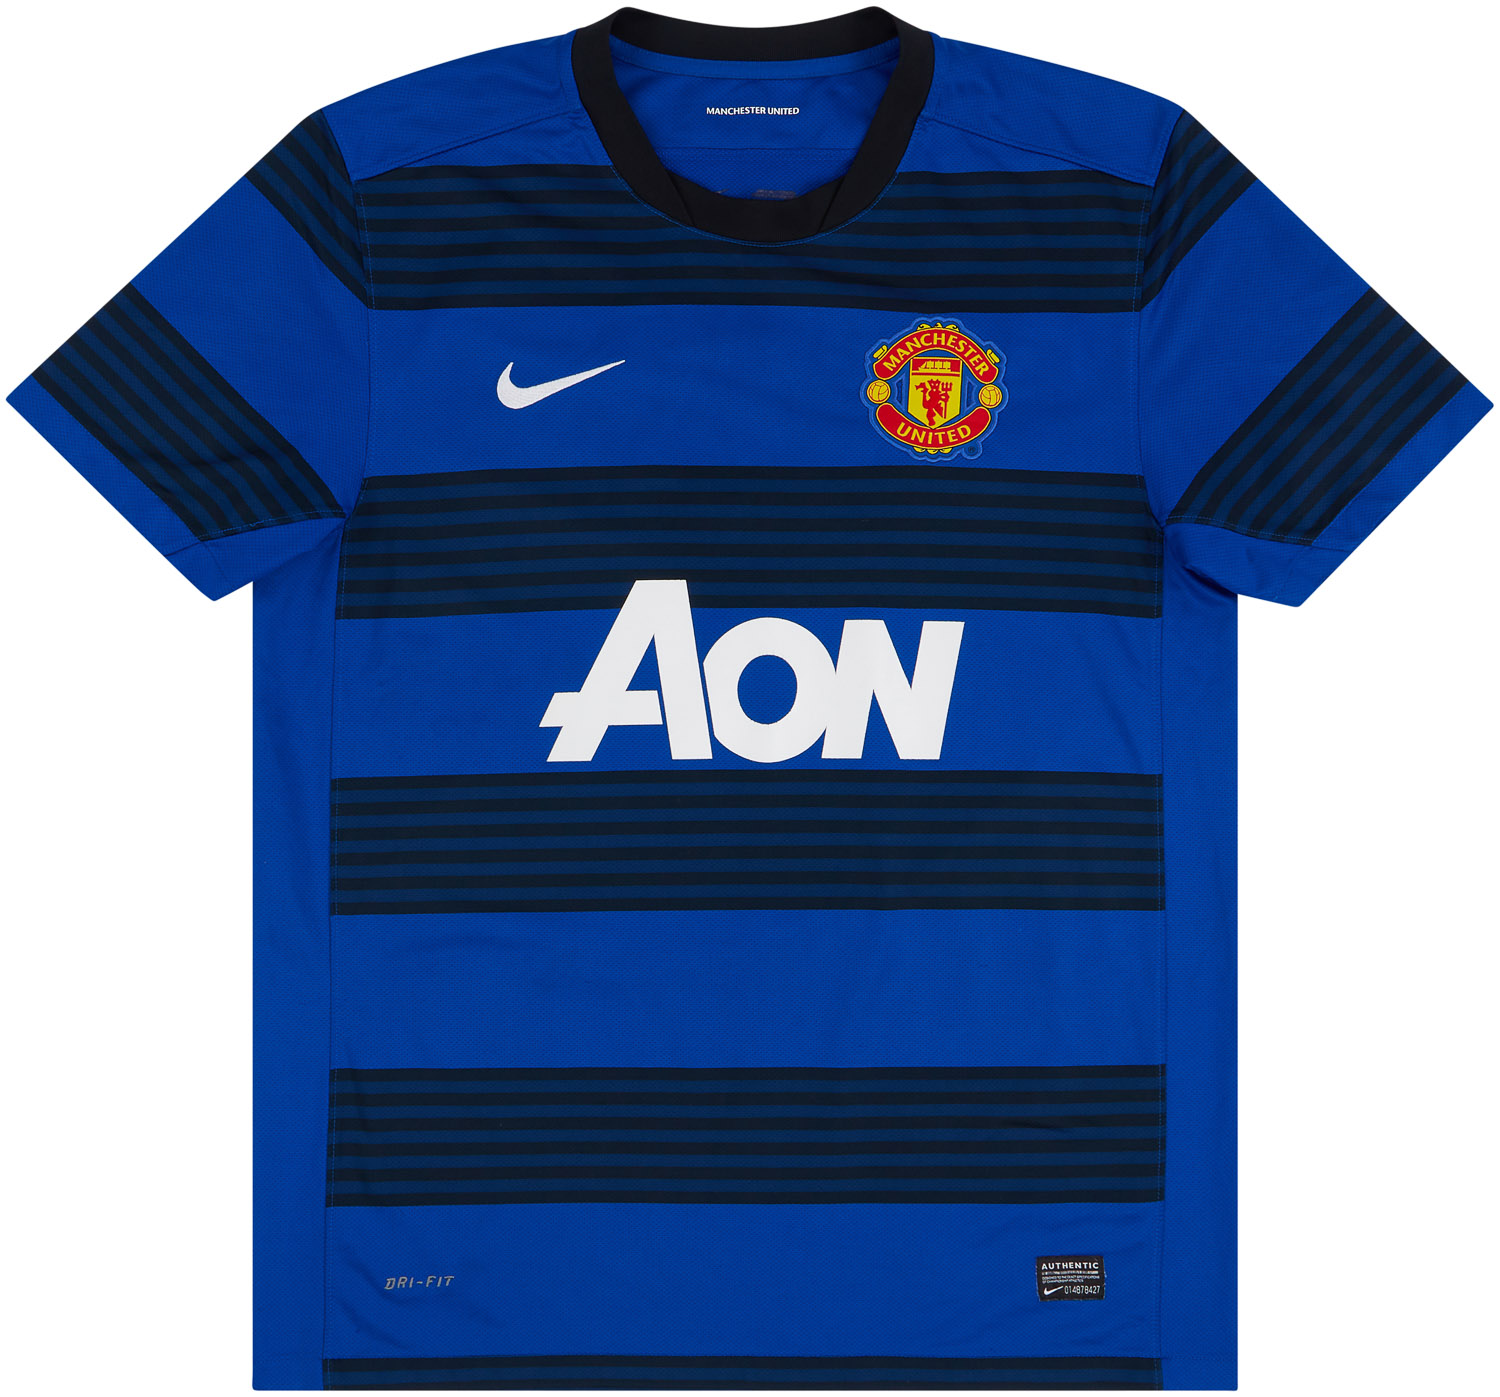 2011-13 Manchester United Away Shirt - 7/10 - ()